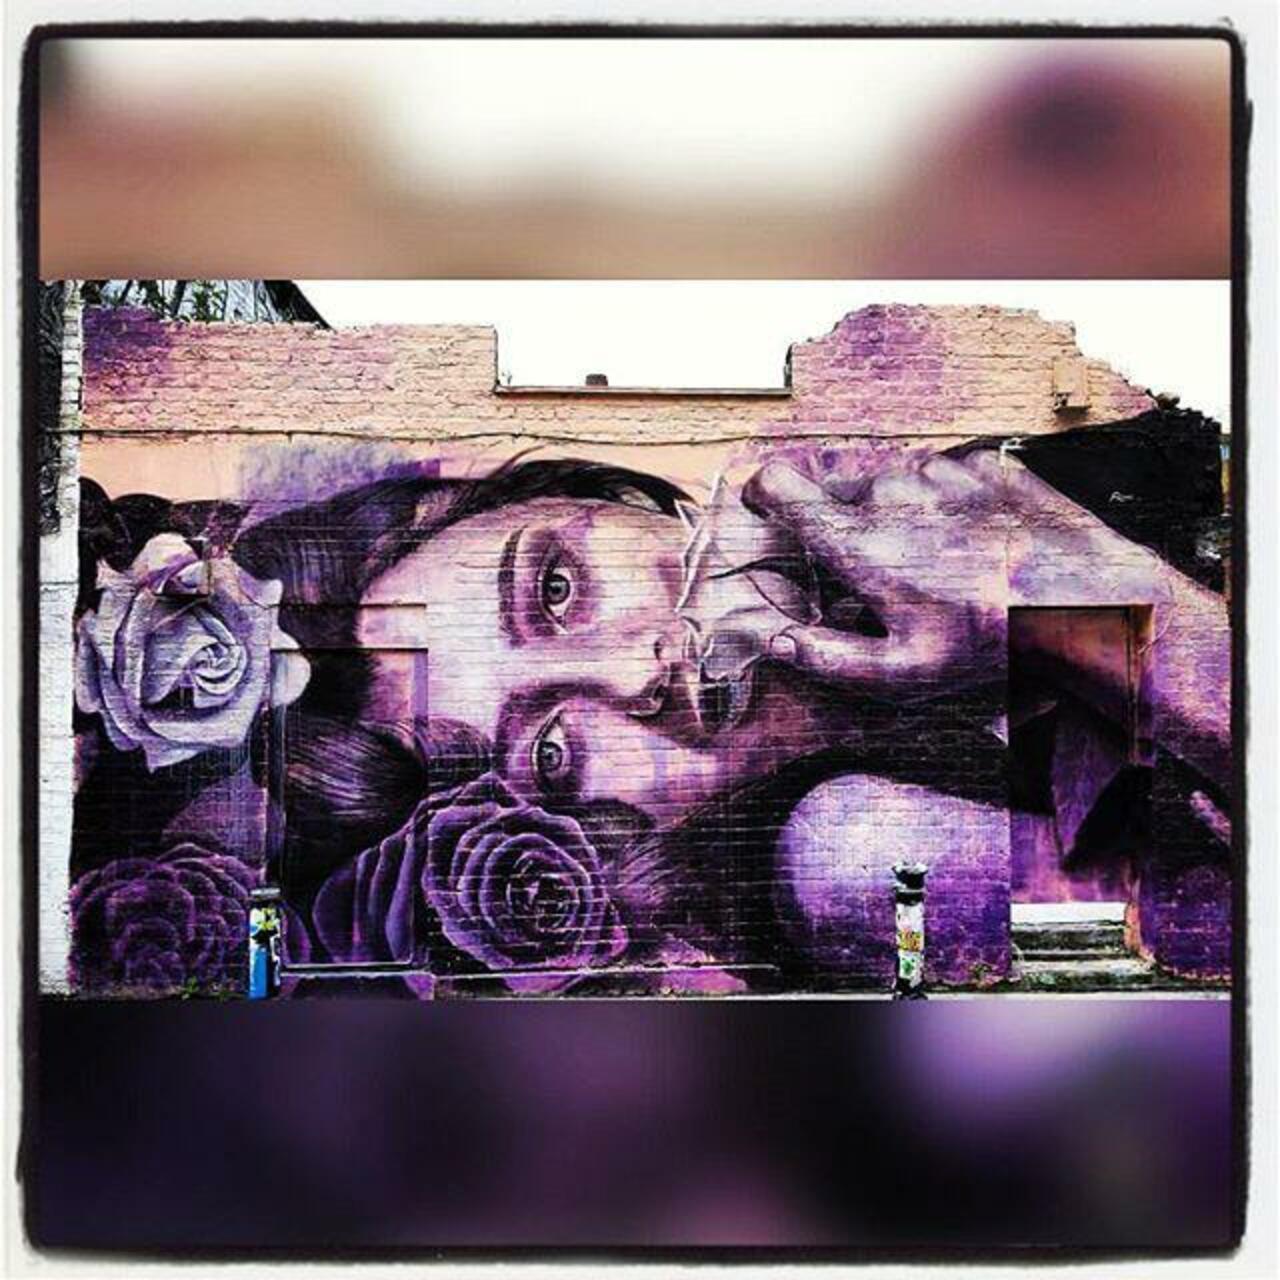 RT @weigeltw: #streetart #london #rone #girl #purple #rose #england #londonstreetart #street #art #streetartlondon #graffiti http://t.co/G26cNg2KxE